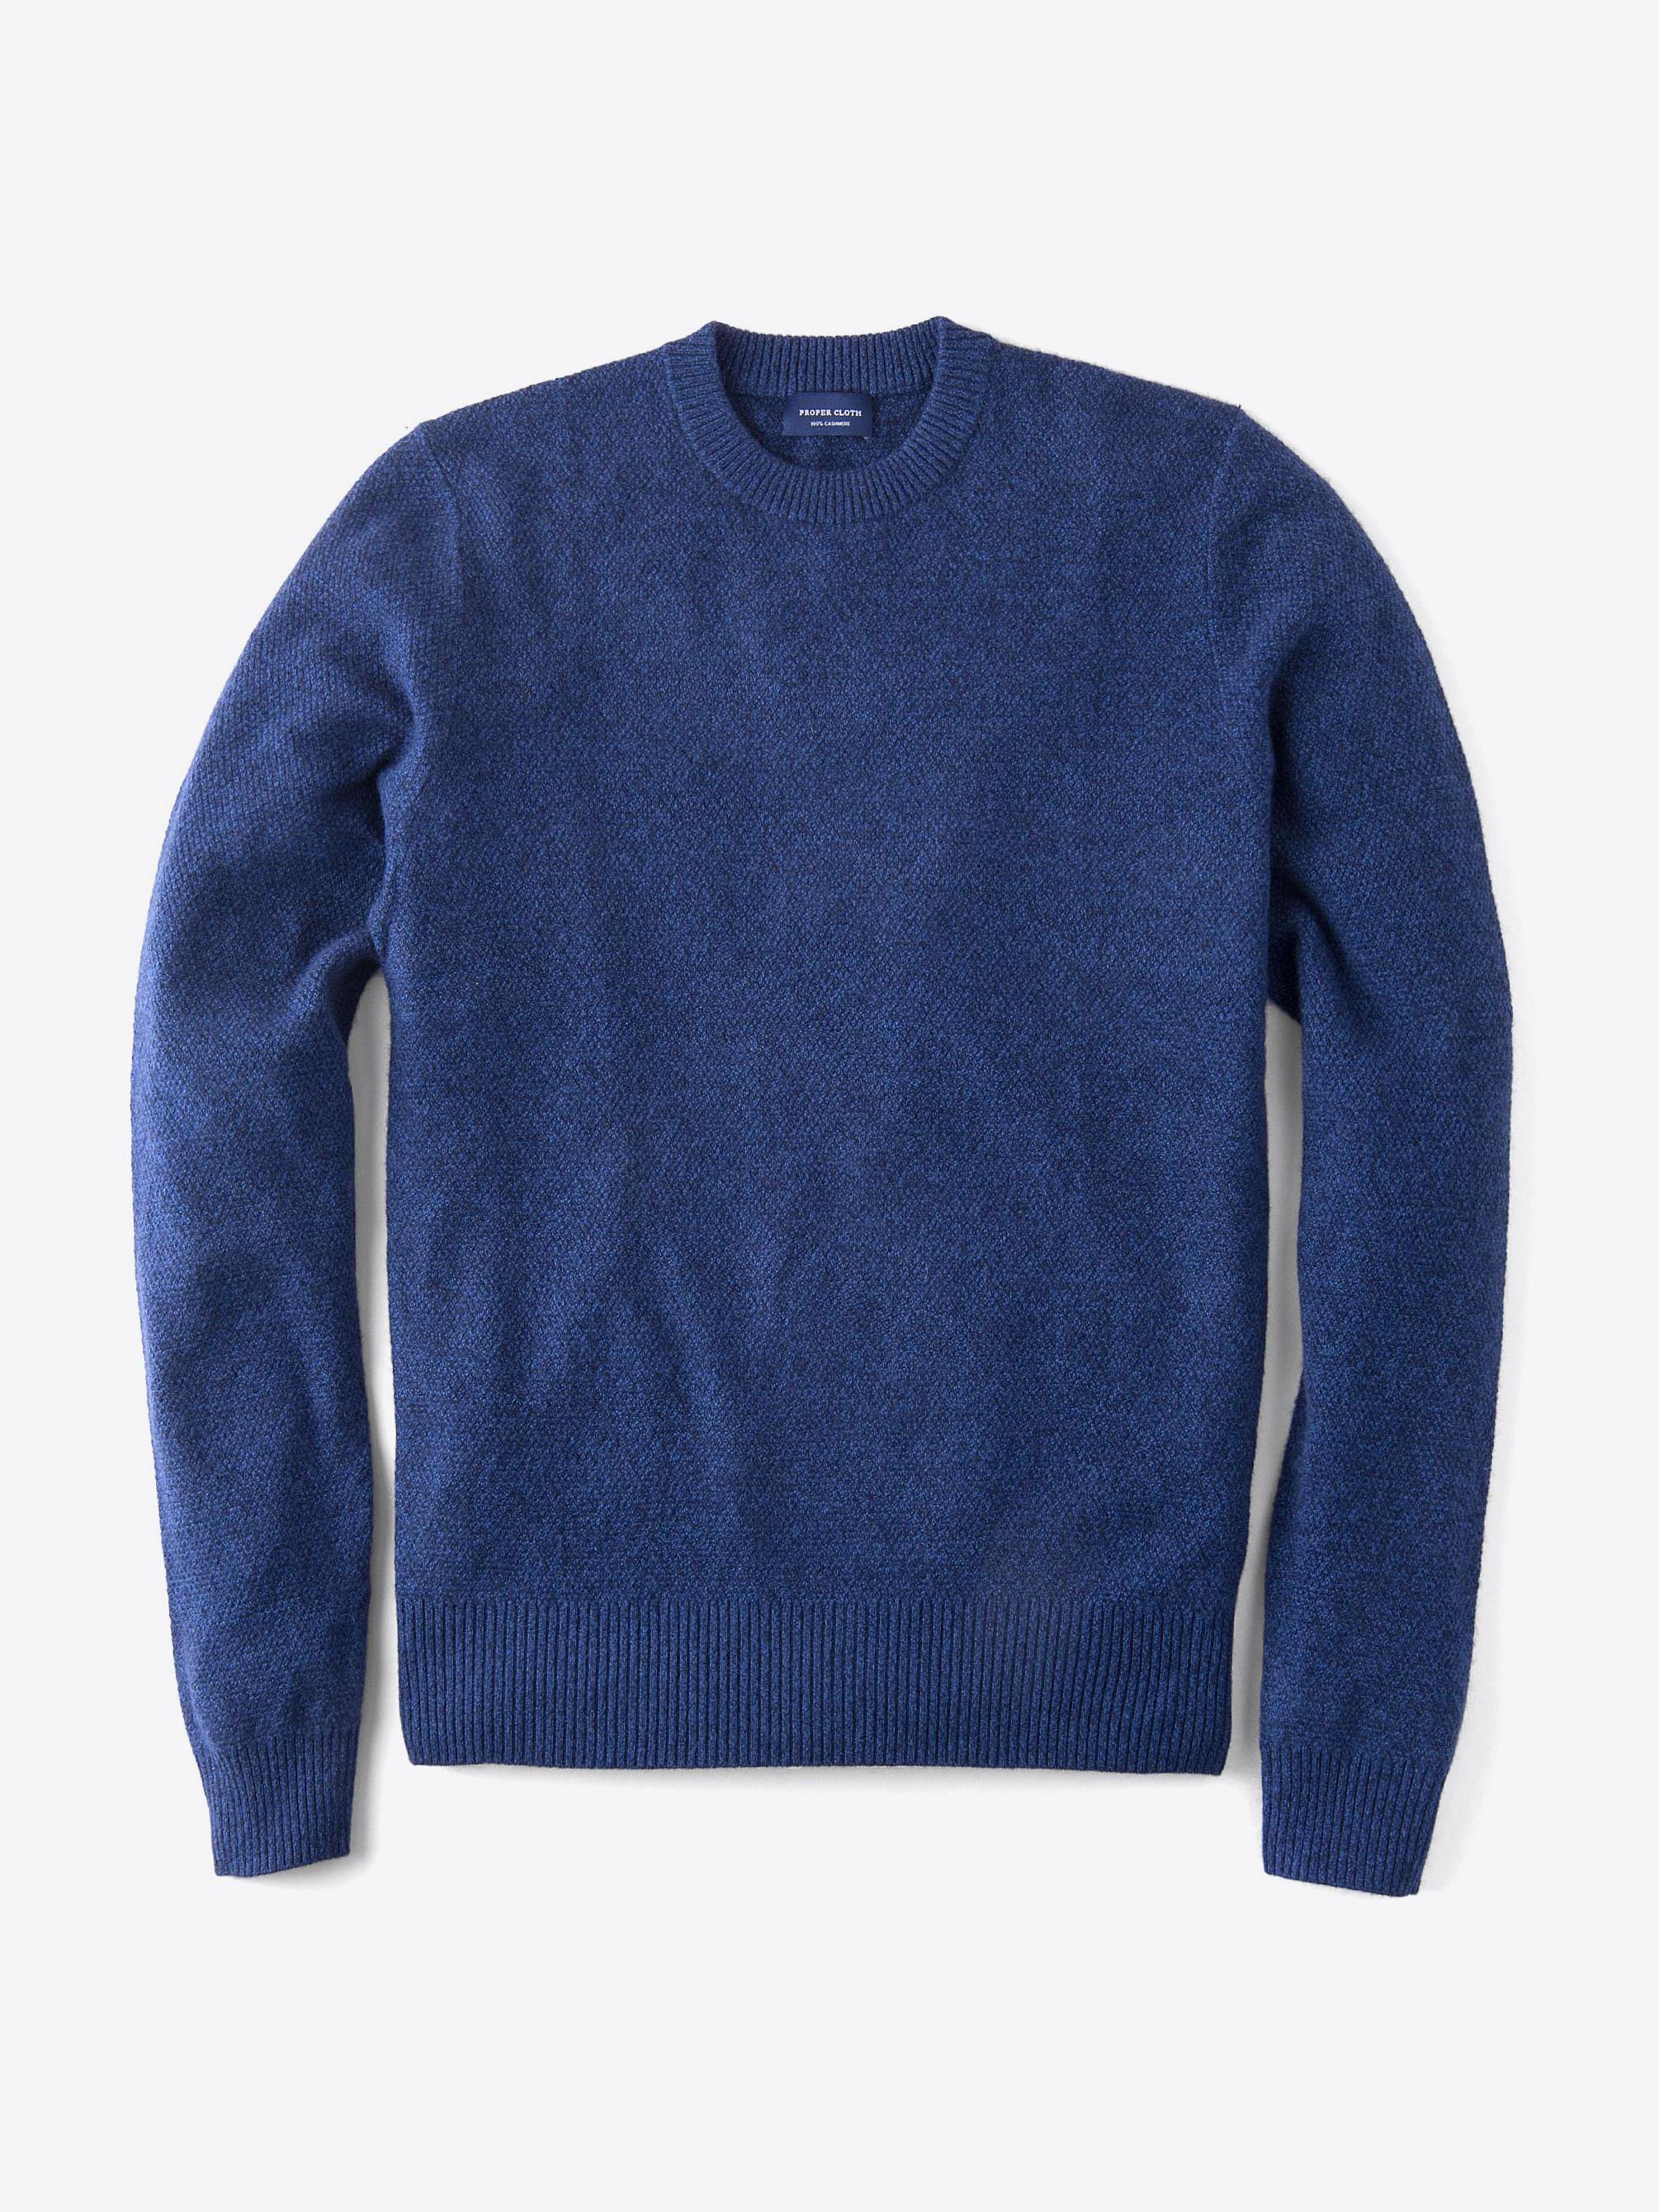 Zoom Image of Indigo Cobble Stitch Cashmere Sweater